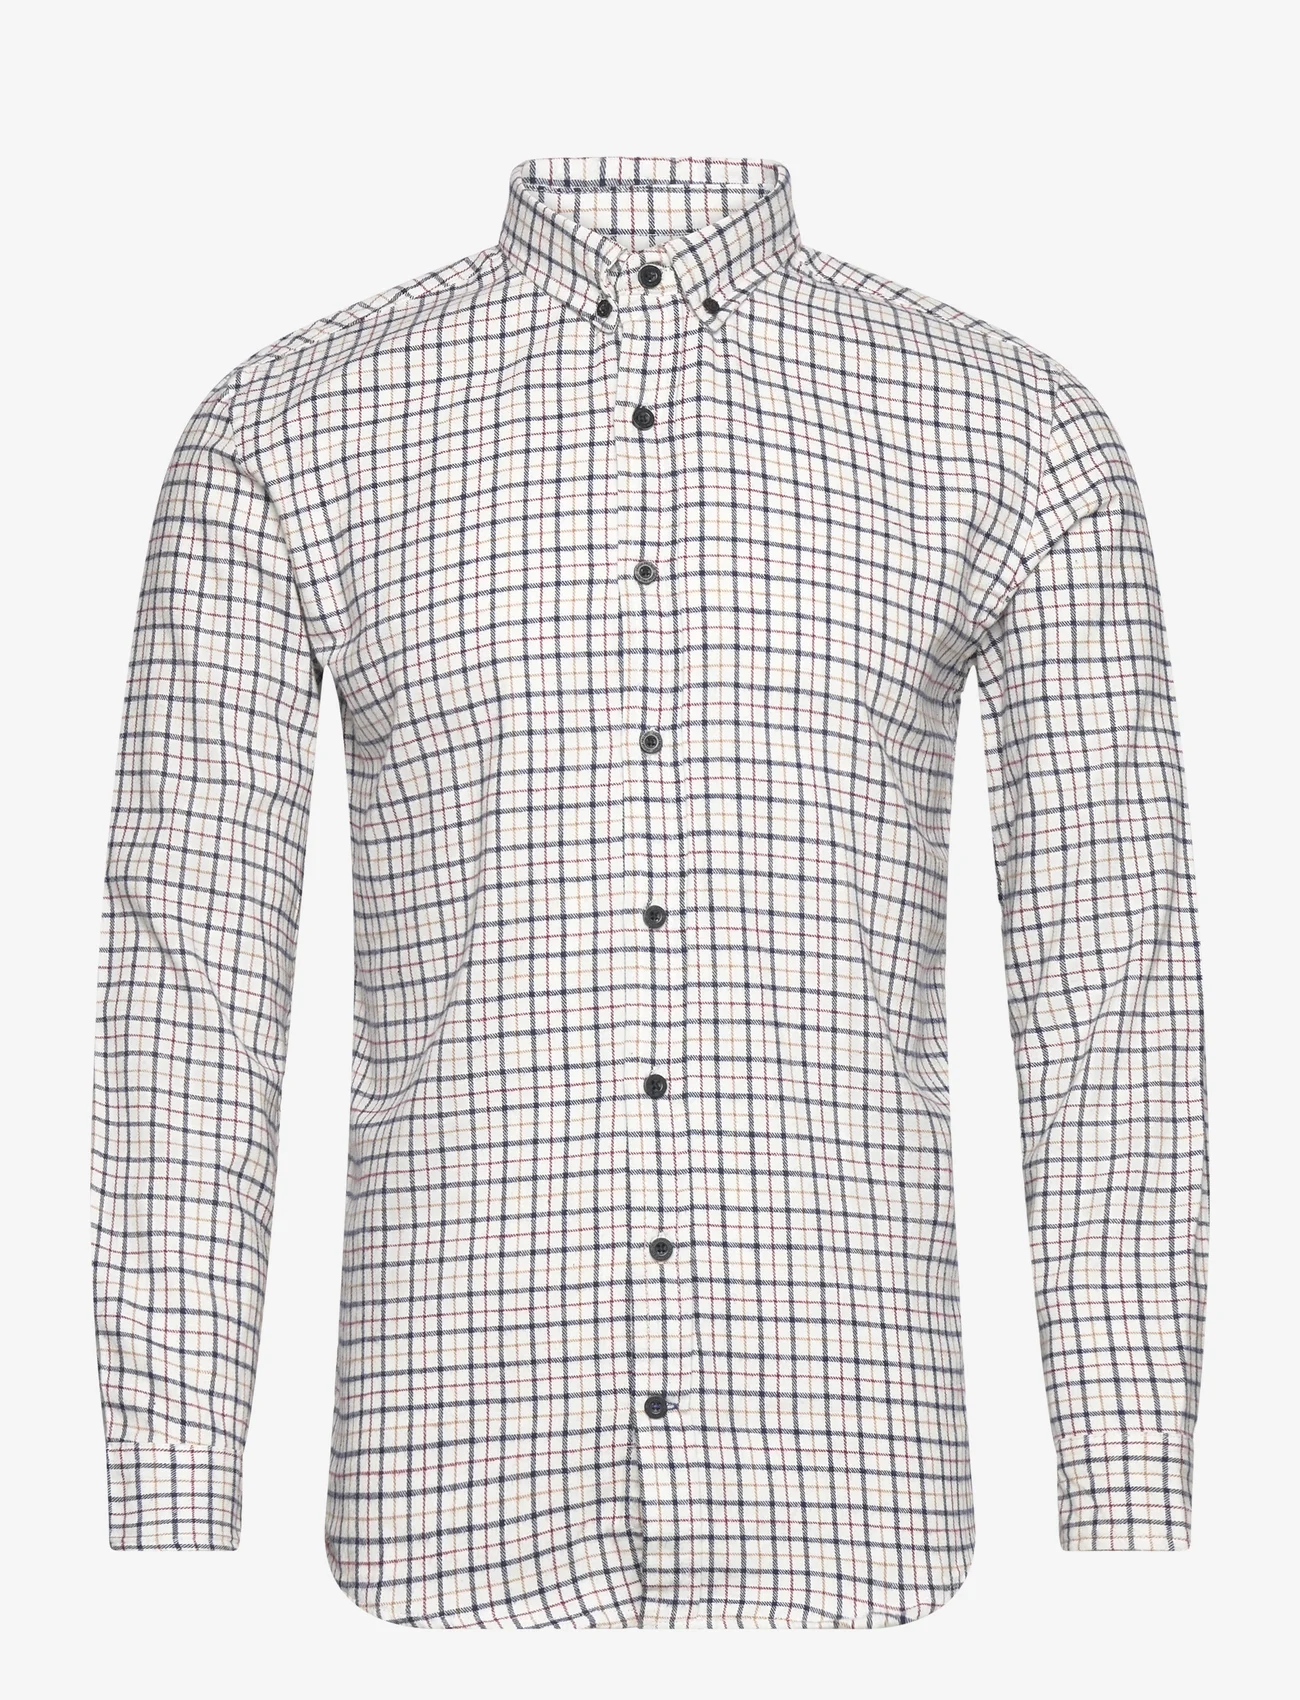 Denim project - DPNEW CHECK SHIRT - checkered shirts - white/blue check - 0